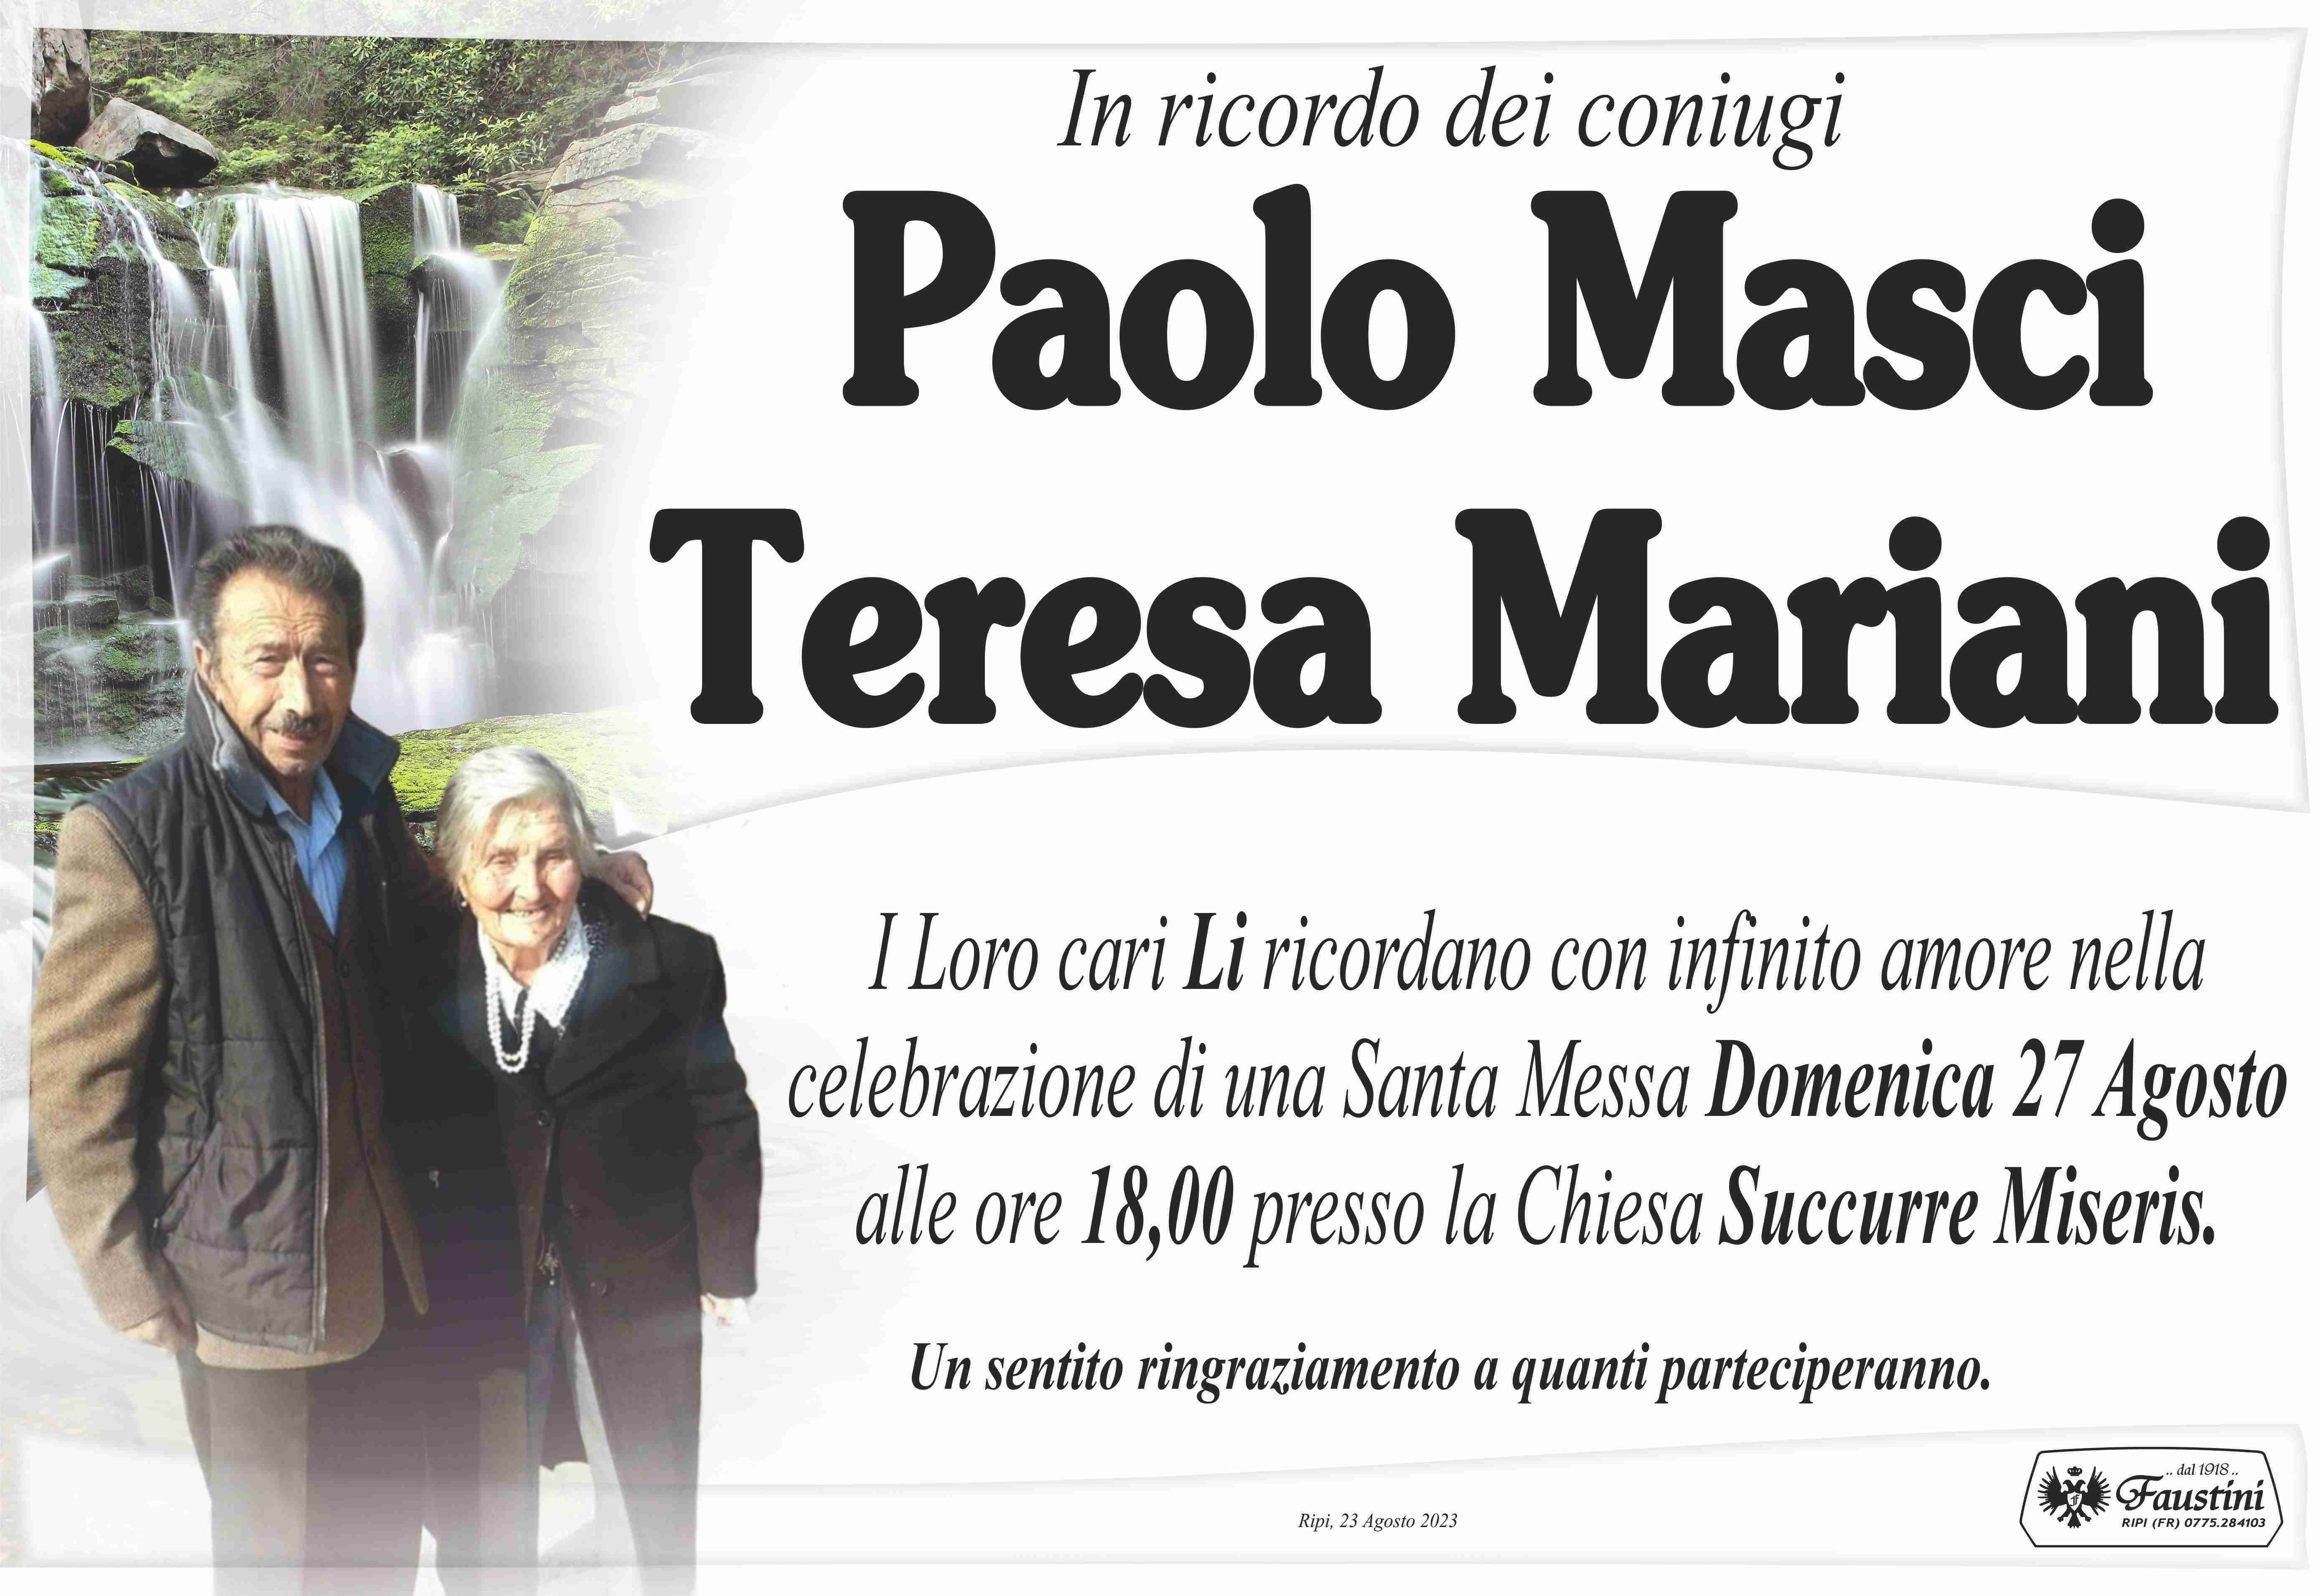 Paolo Masci - Teresa Mariani